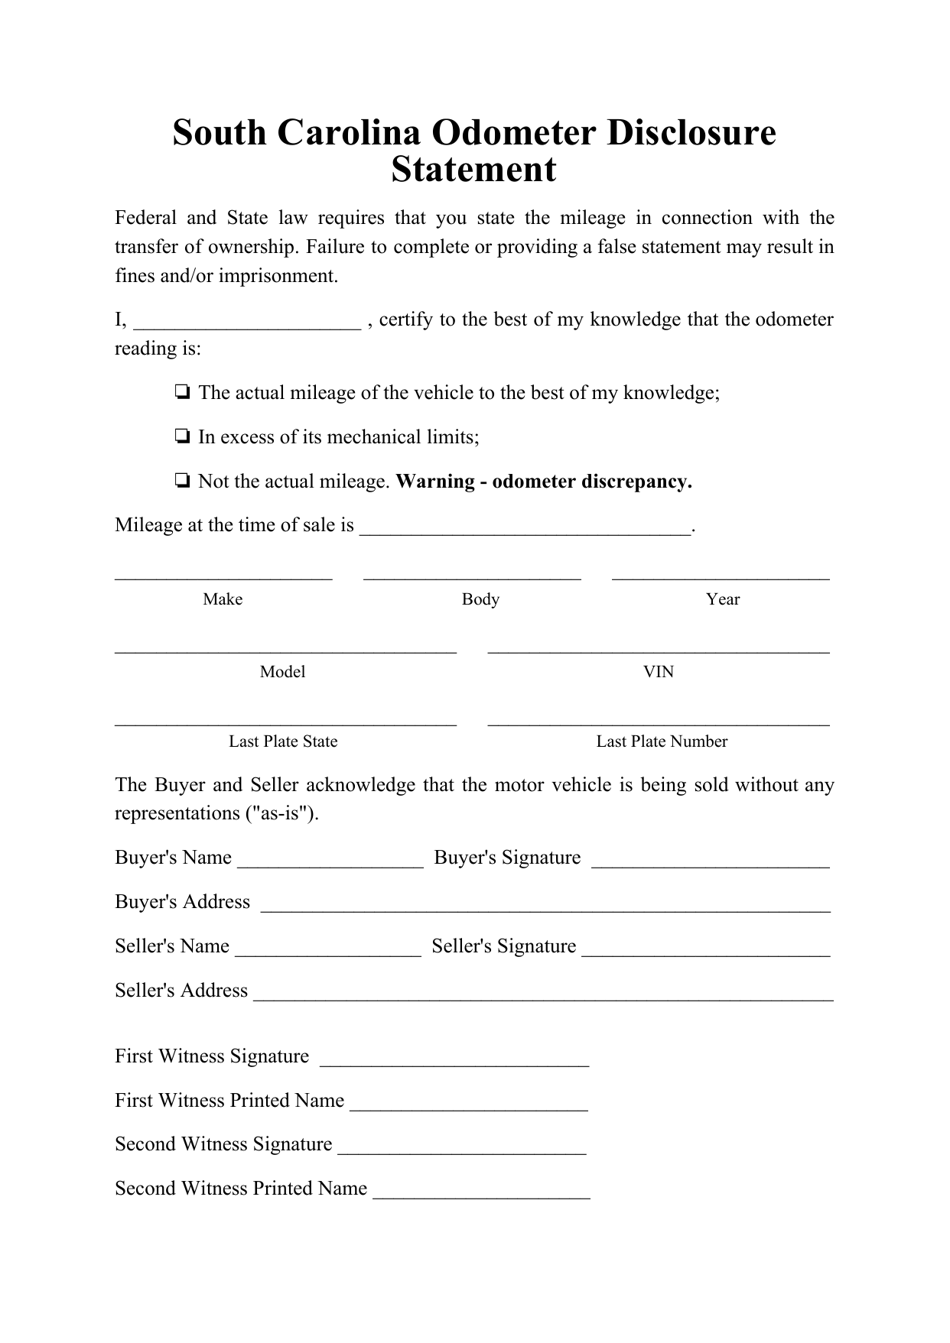 Odometer Disclosure Statement Form - South Carolina, Page 1